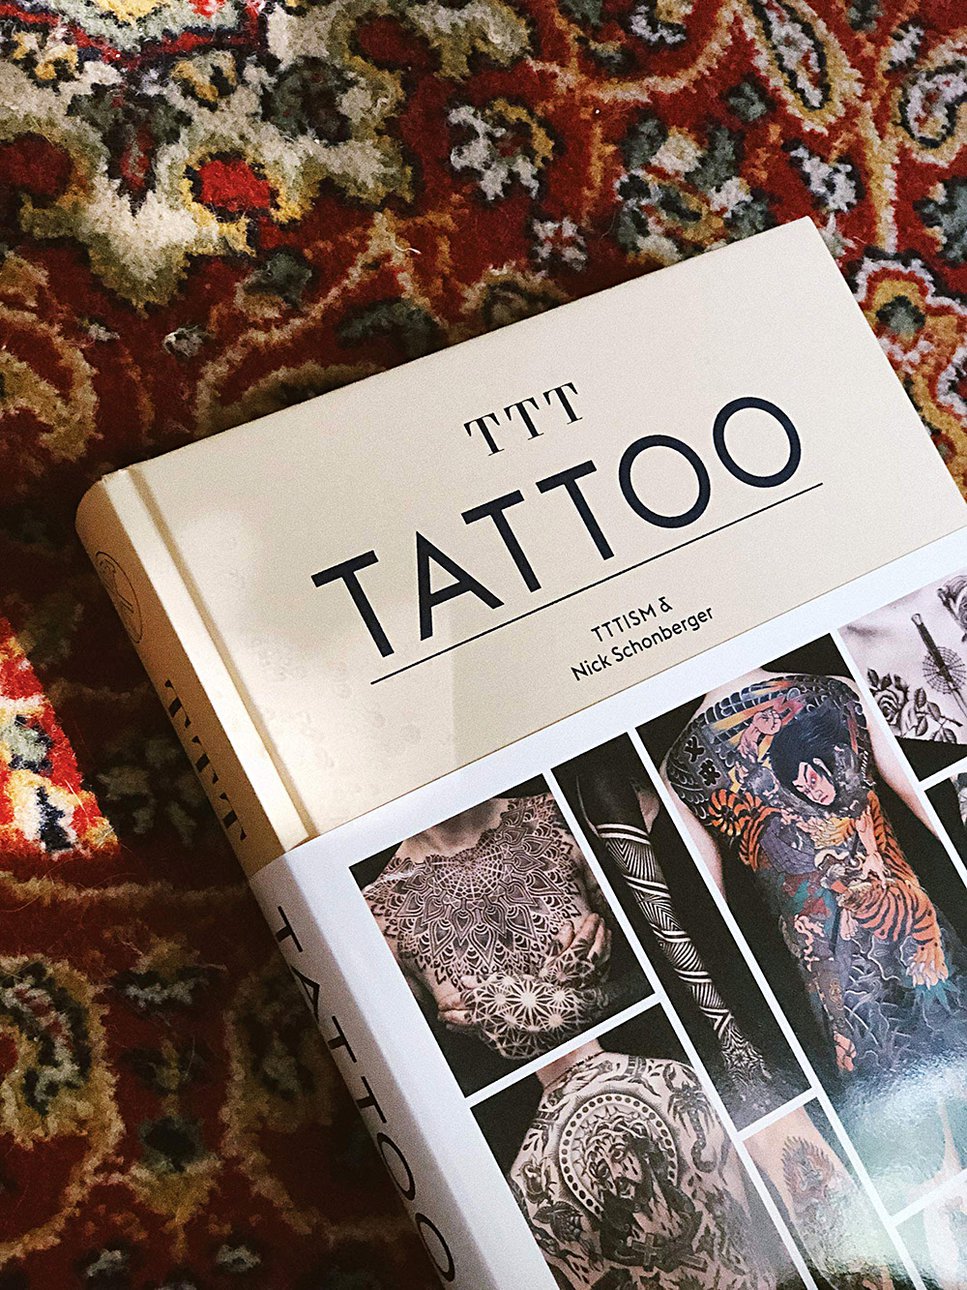 TTT: Tattoo / TTTism & Nick Schonberger. Laurence King. 528 с. £50. На английском языке